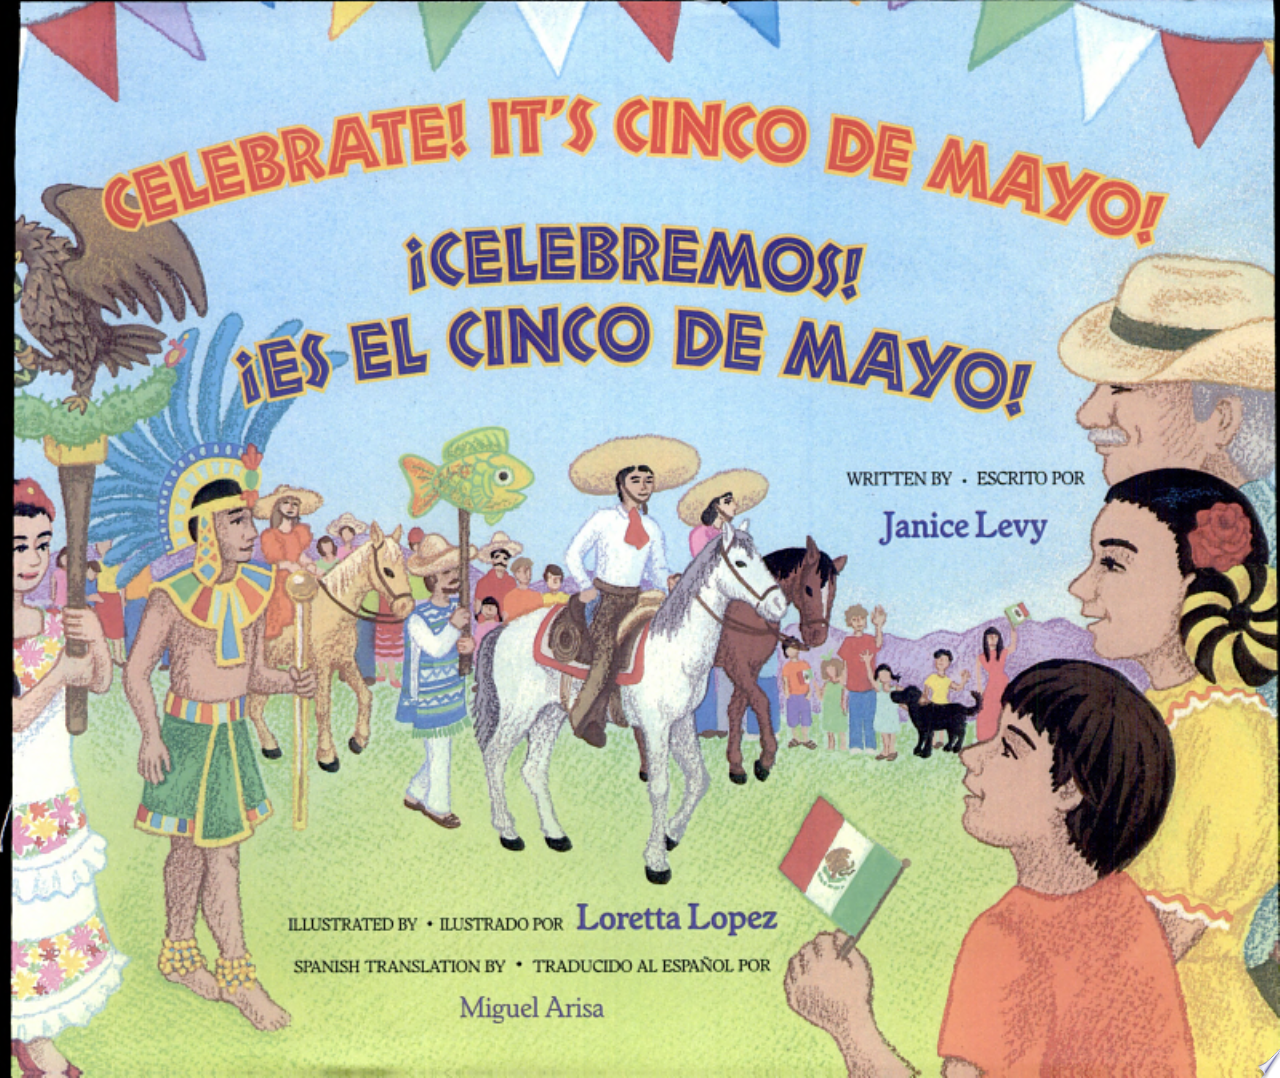 Image for "Celebrate! It's Cinco de Mayo!"